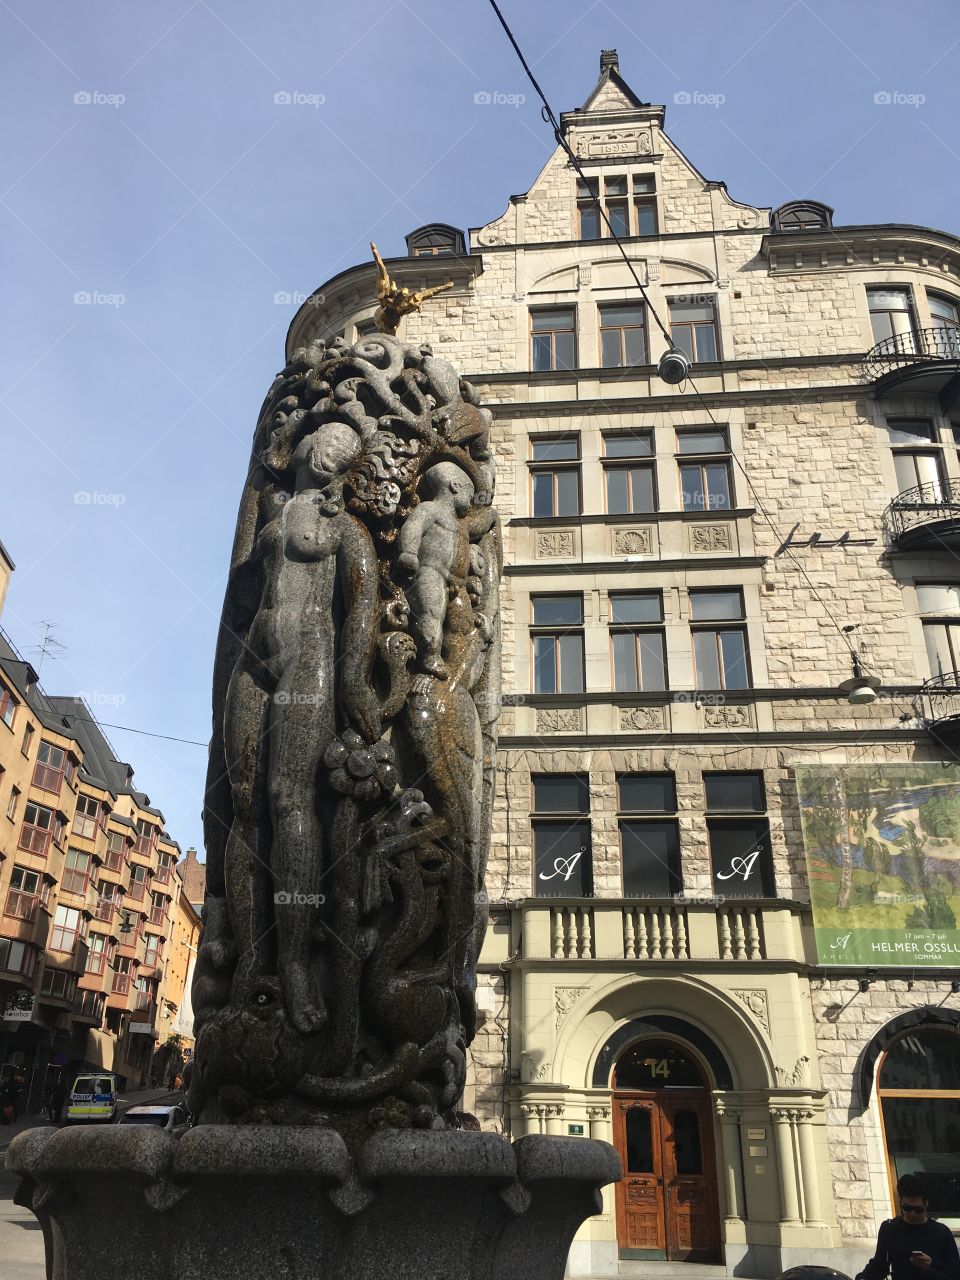 Stockholm statue